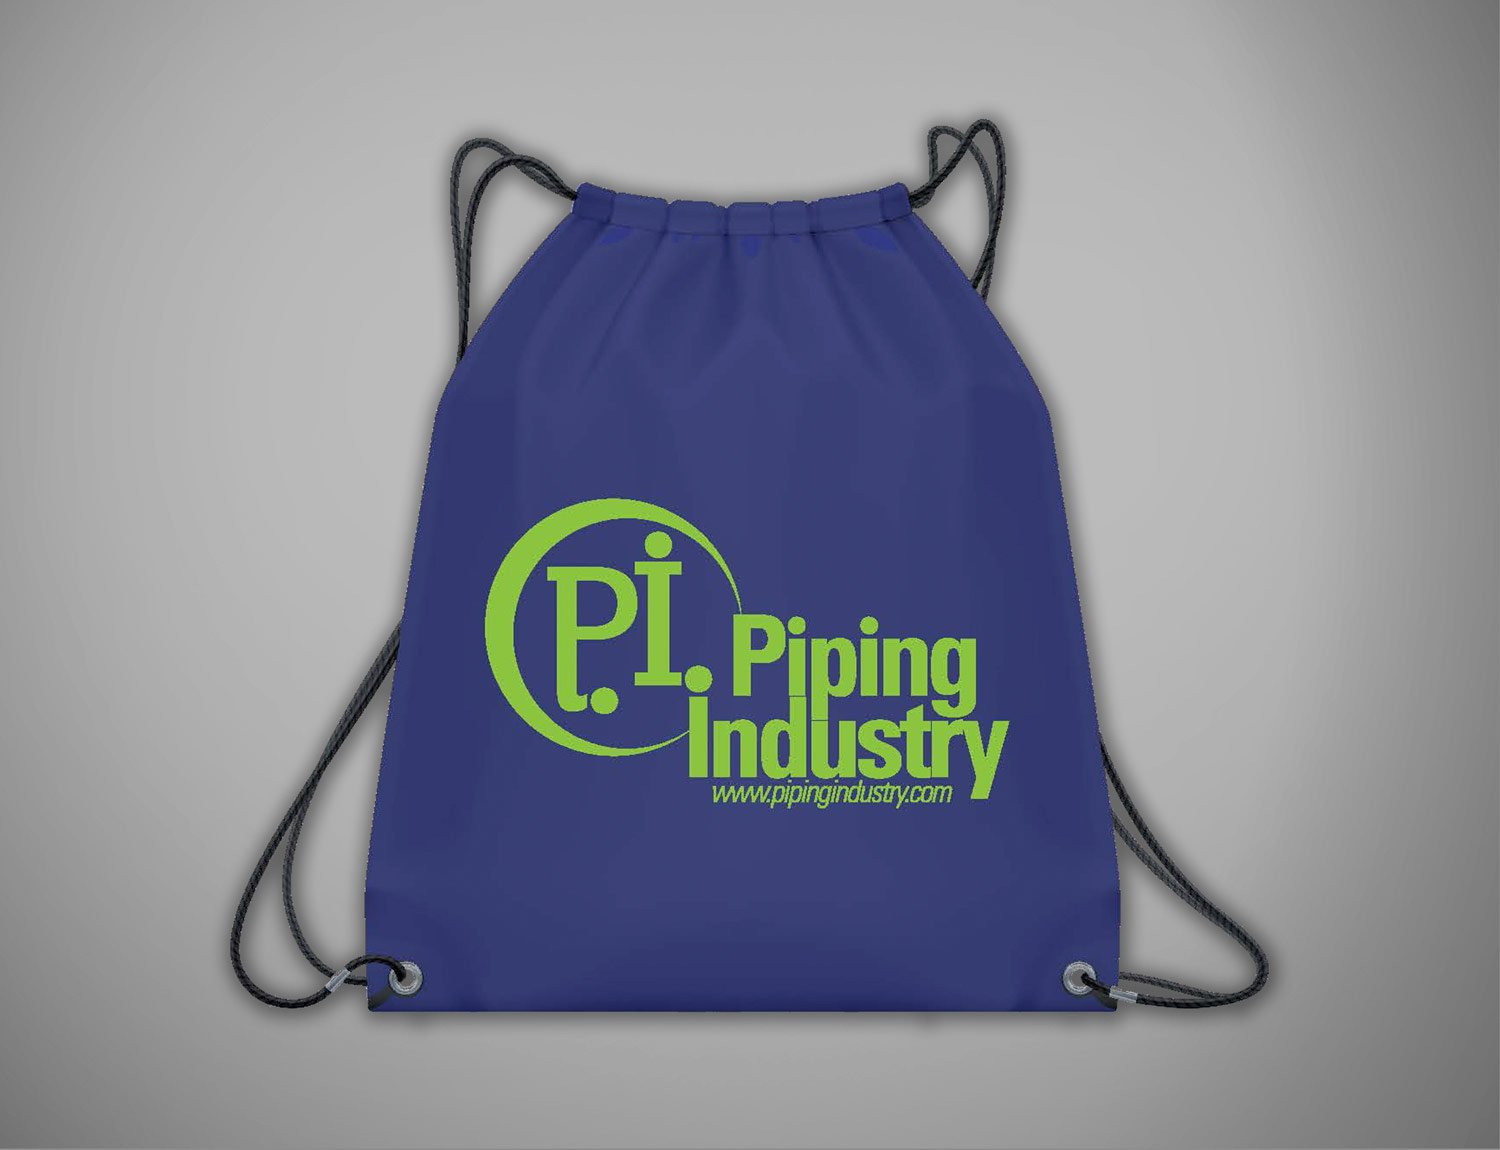 Piping-Industry-Drawstring-Backpack-Merchandise.jpg